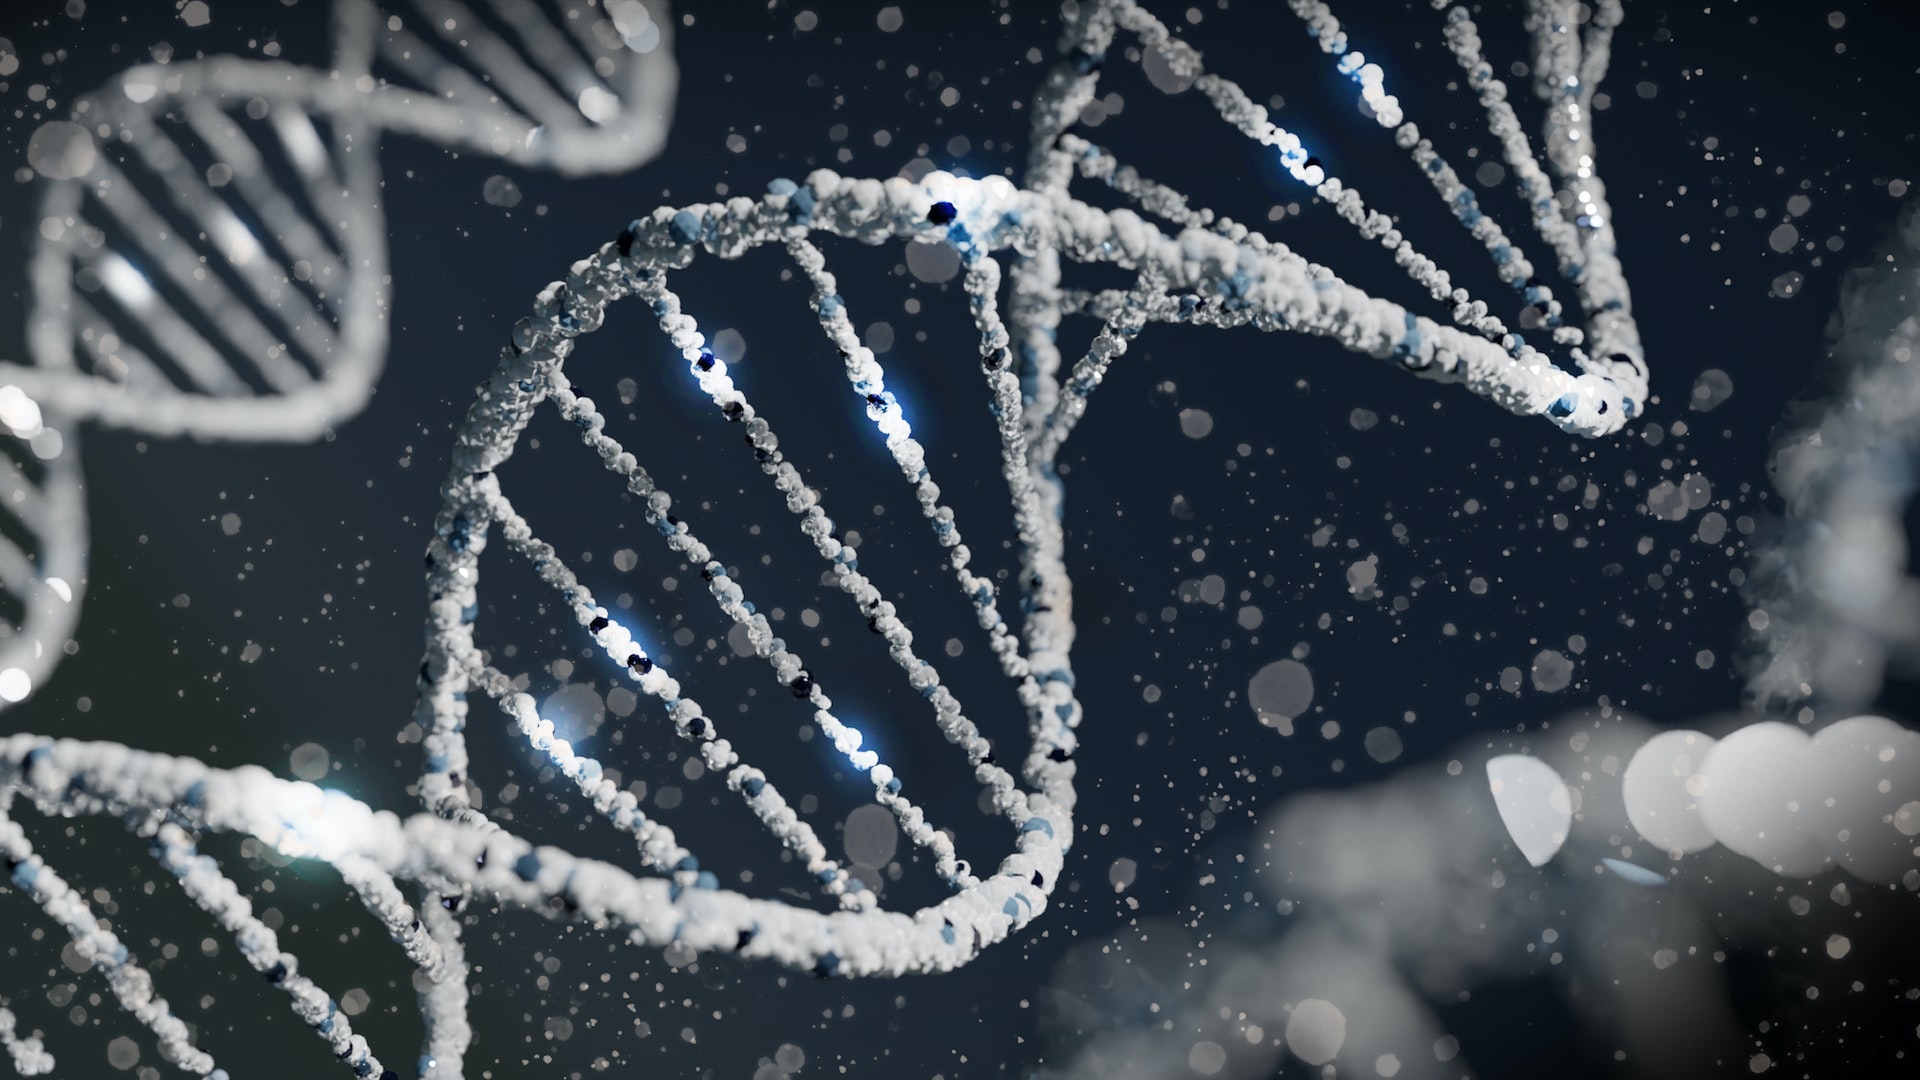 Next Up for CRISPR: Gene Editing for The Masses?